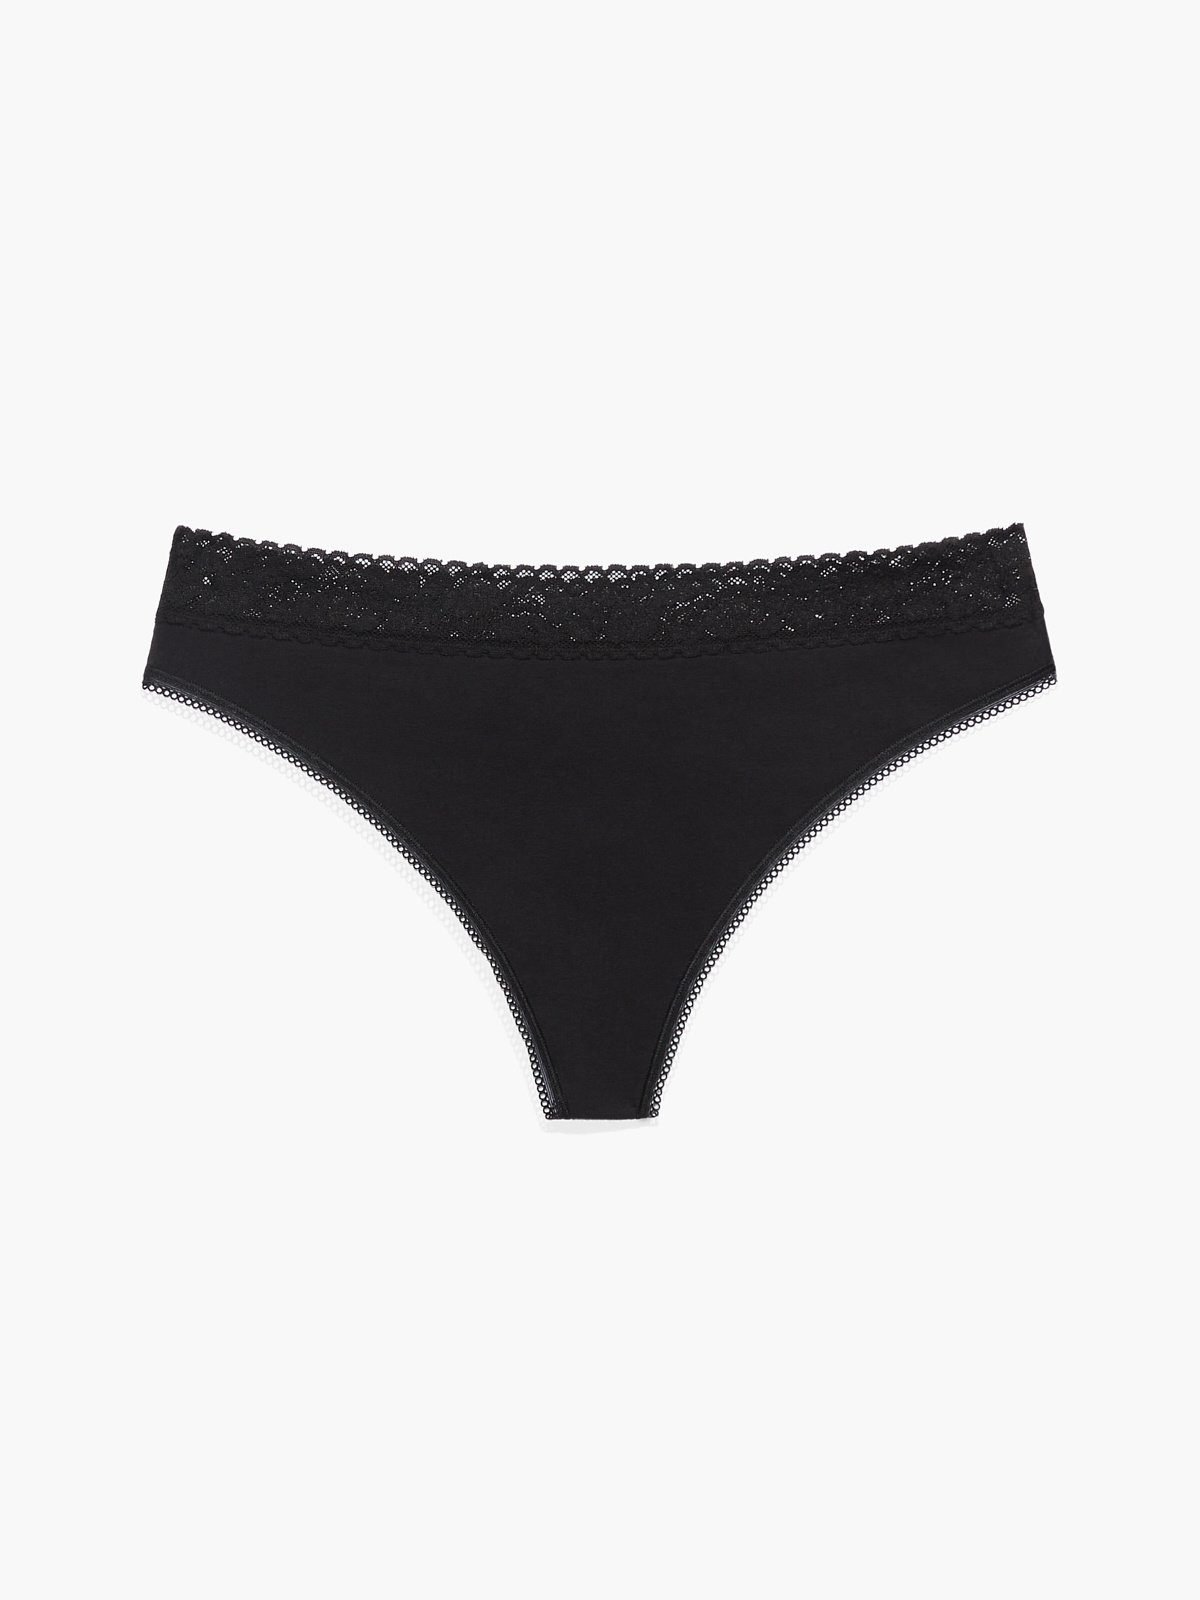 LEEy-world Seamless Underwear for Women Women's Motive Cotton Multipack  Thong Panty,Black